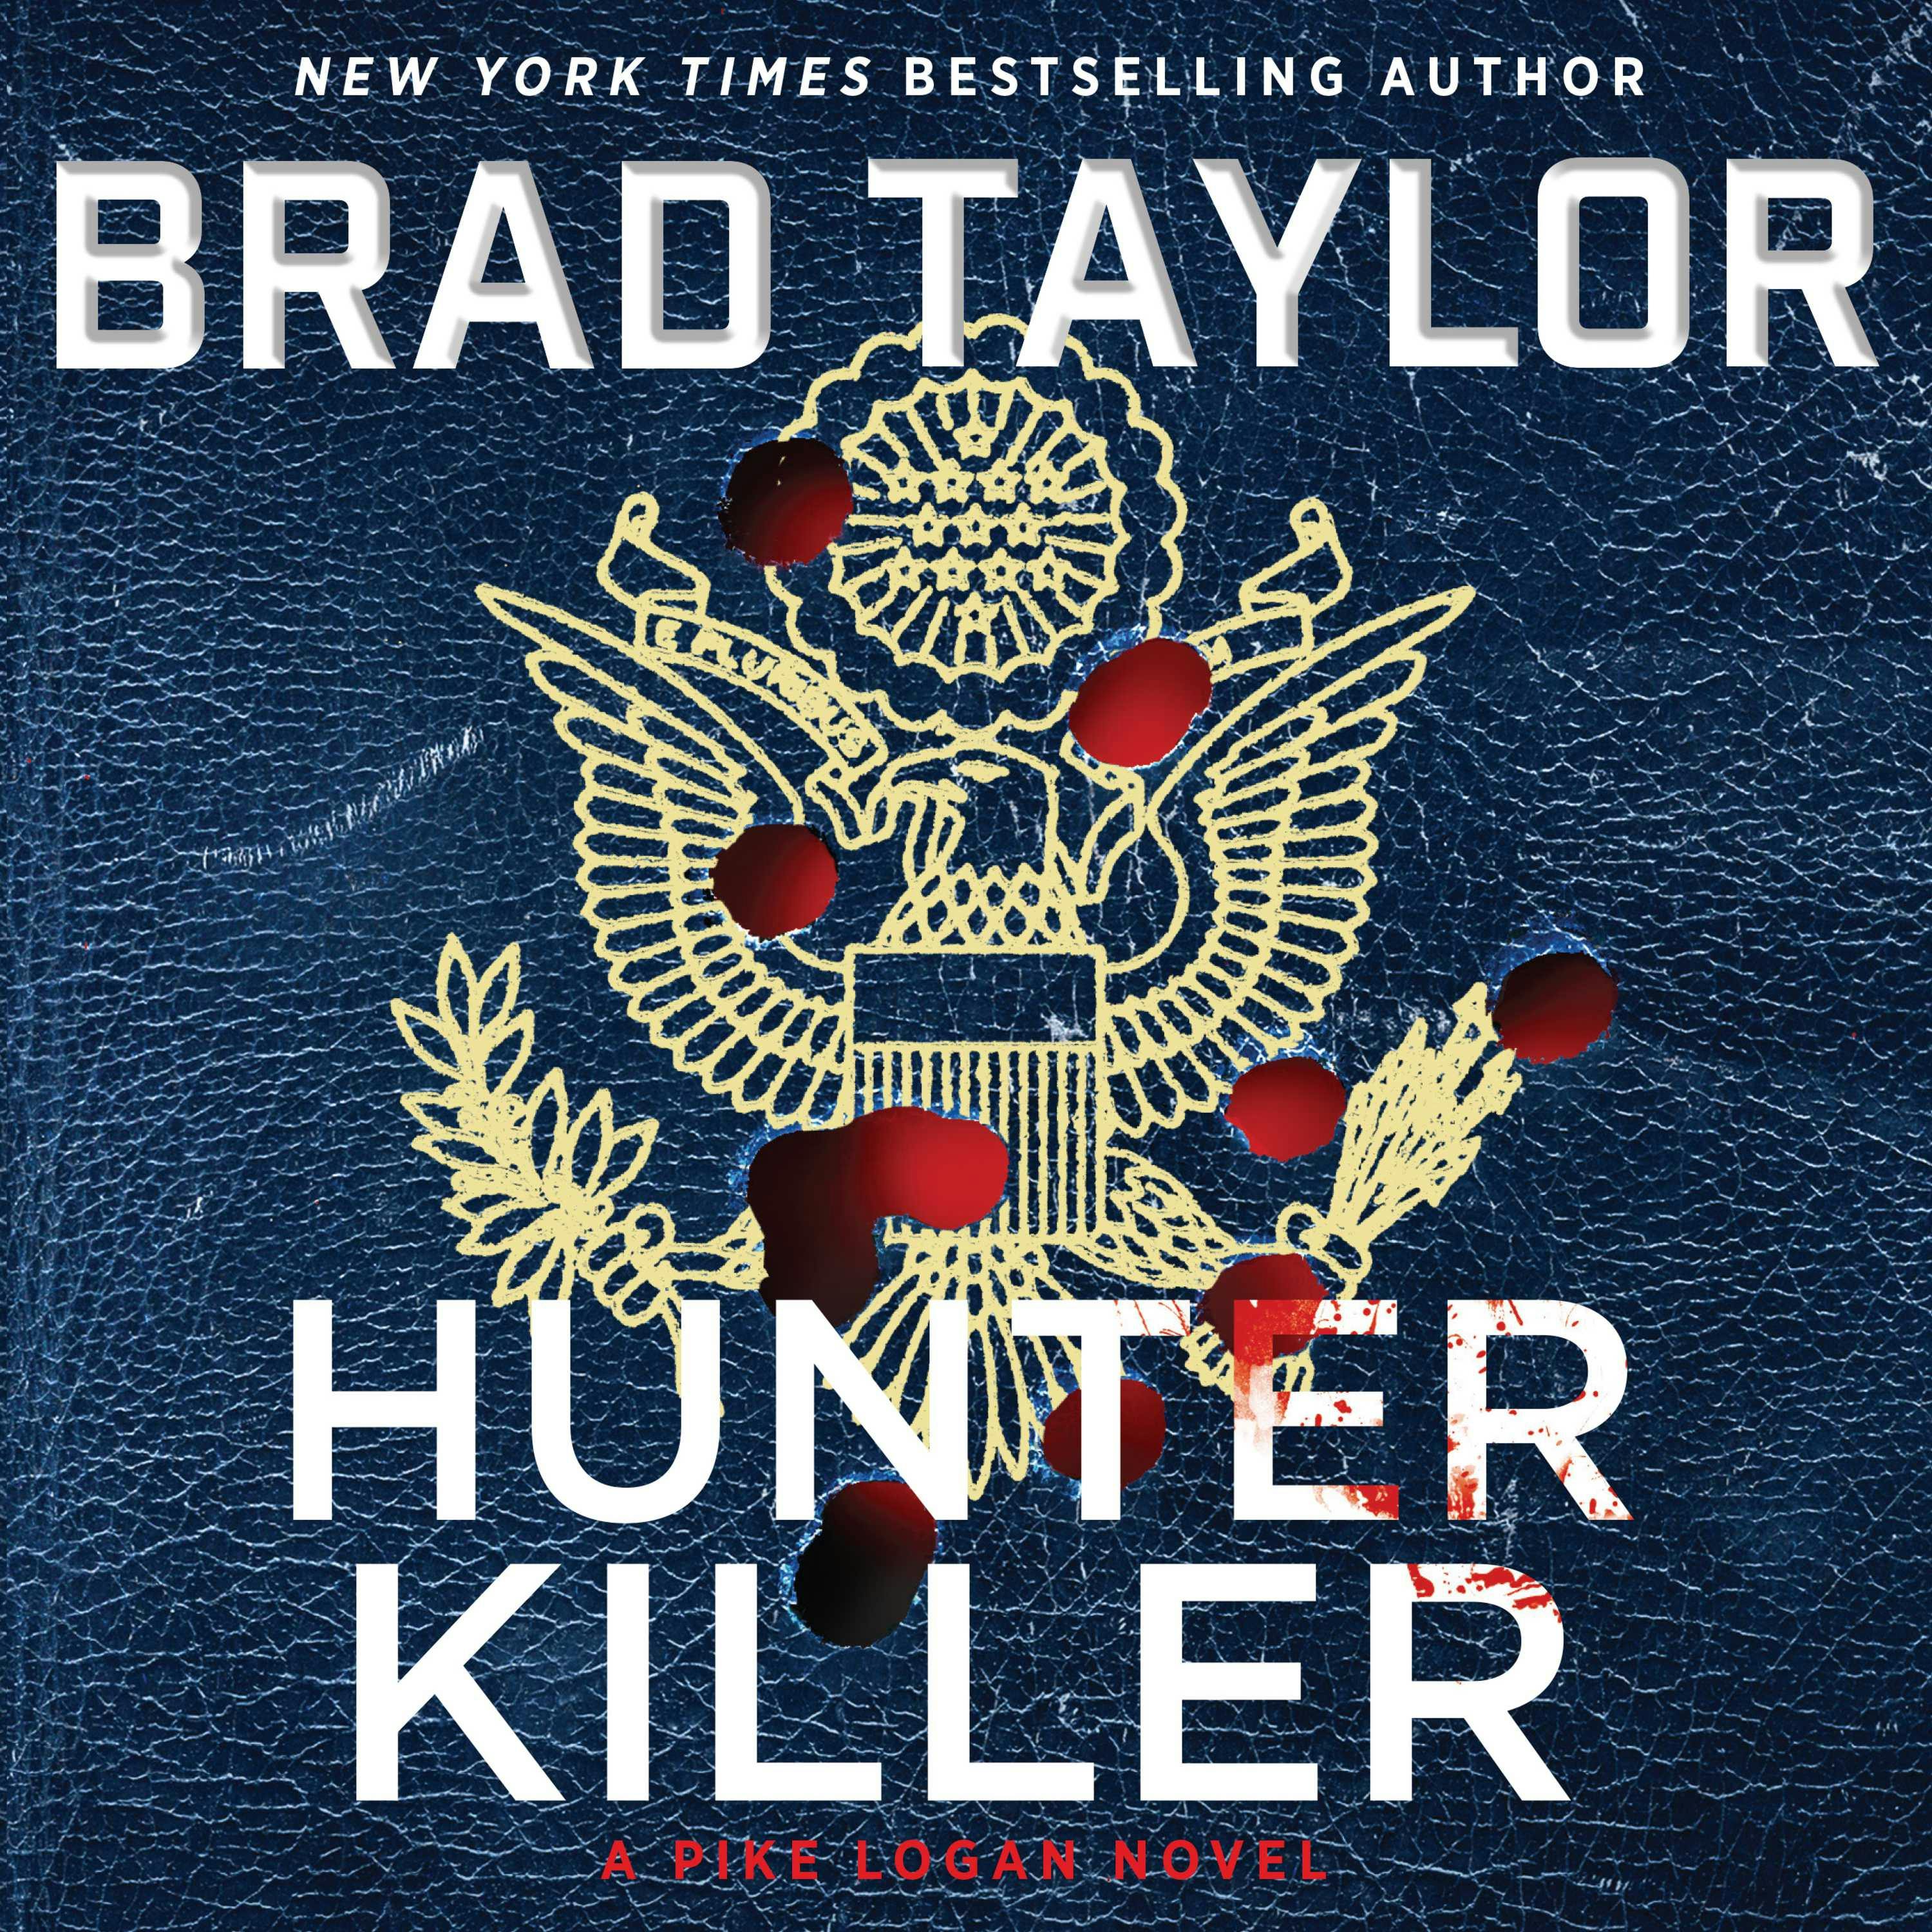 Hunter Killer: A Pike Logan Novel - Brad Taylor